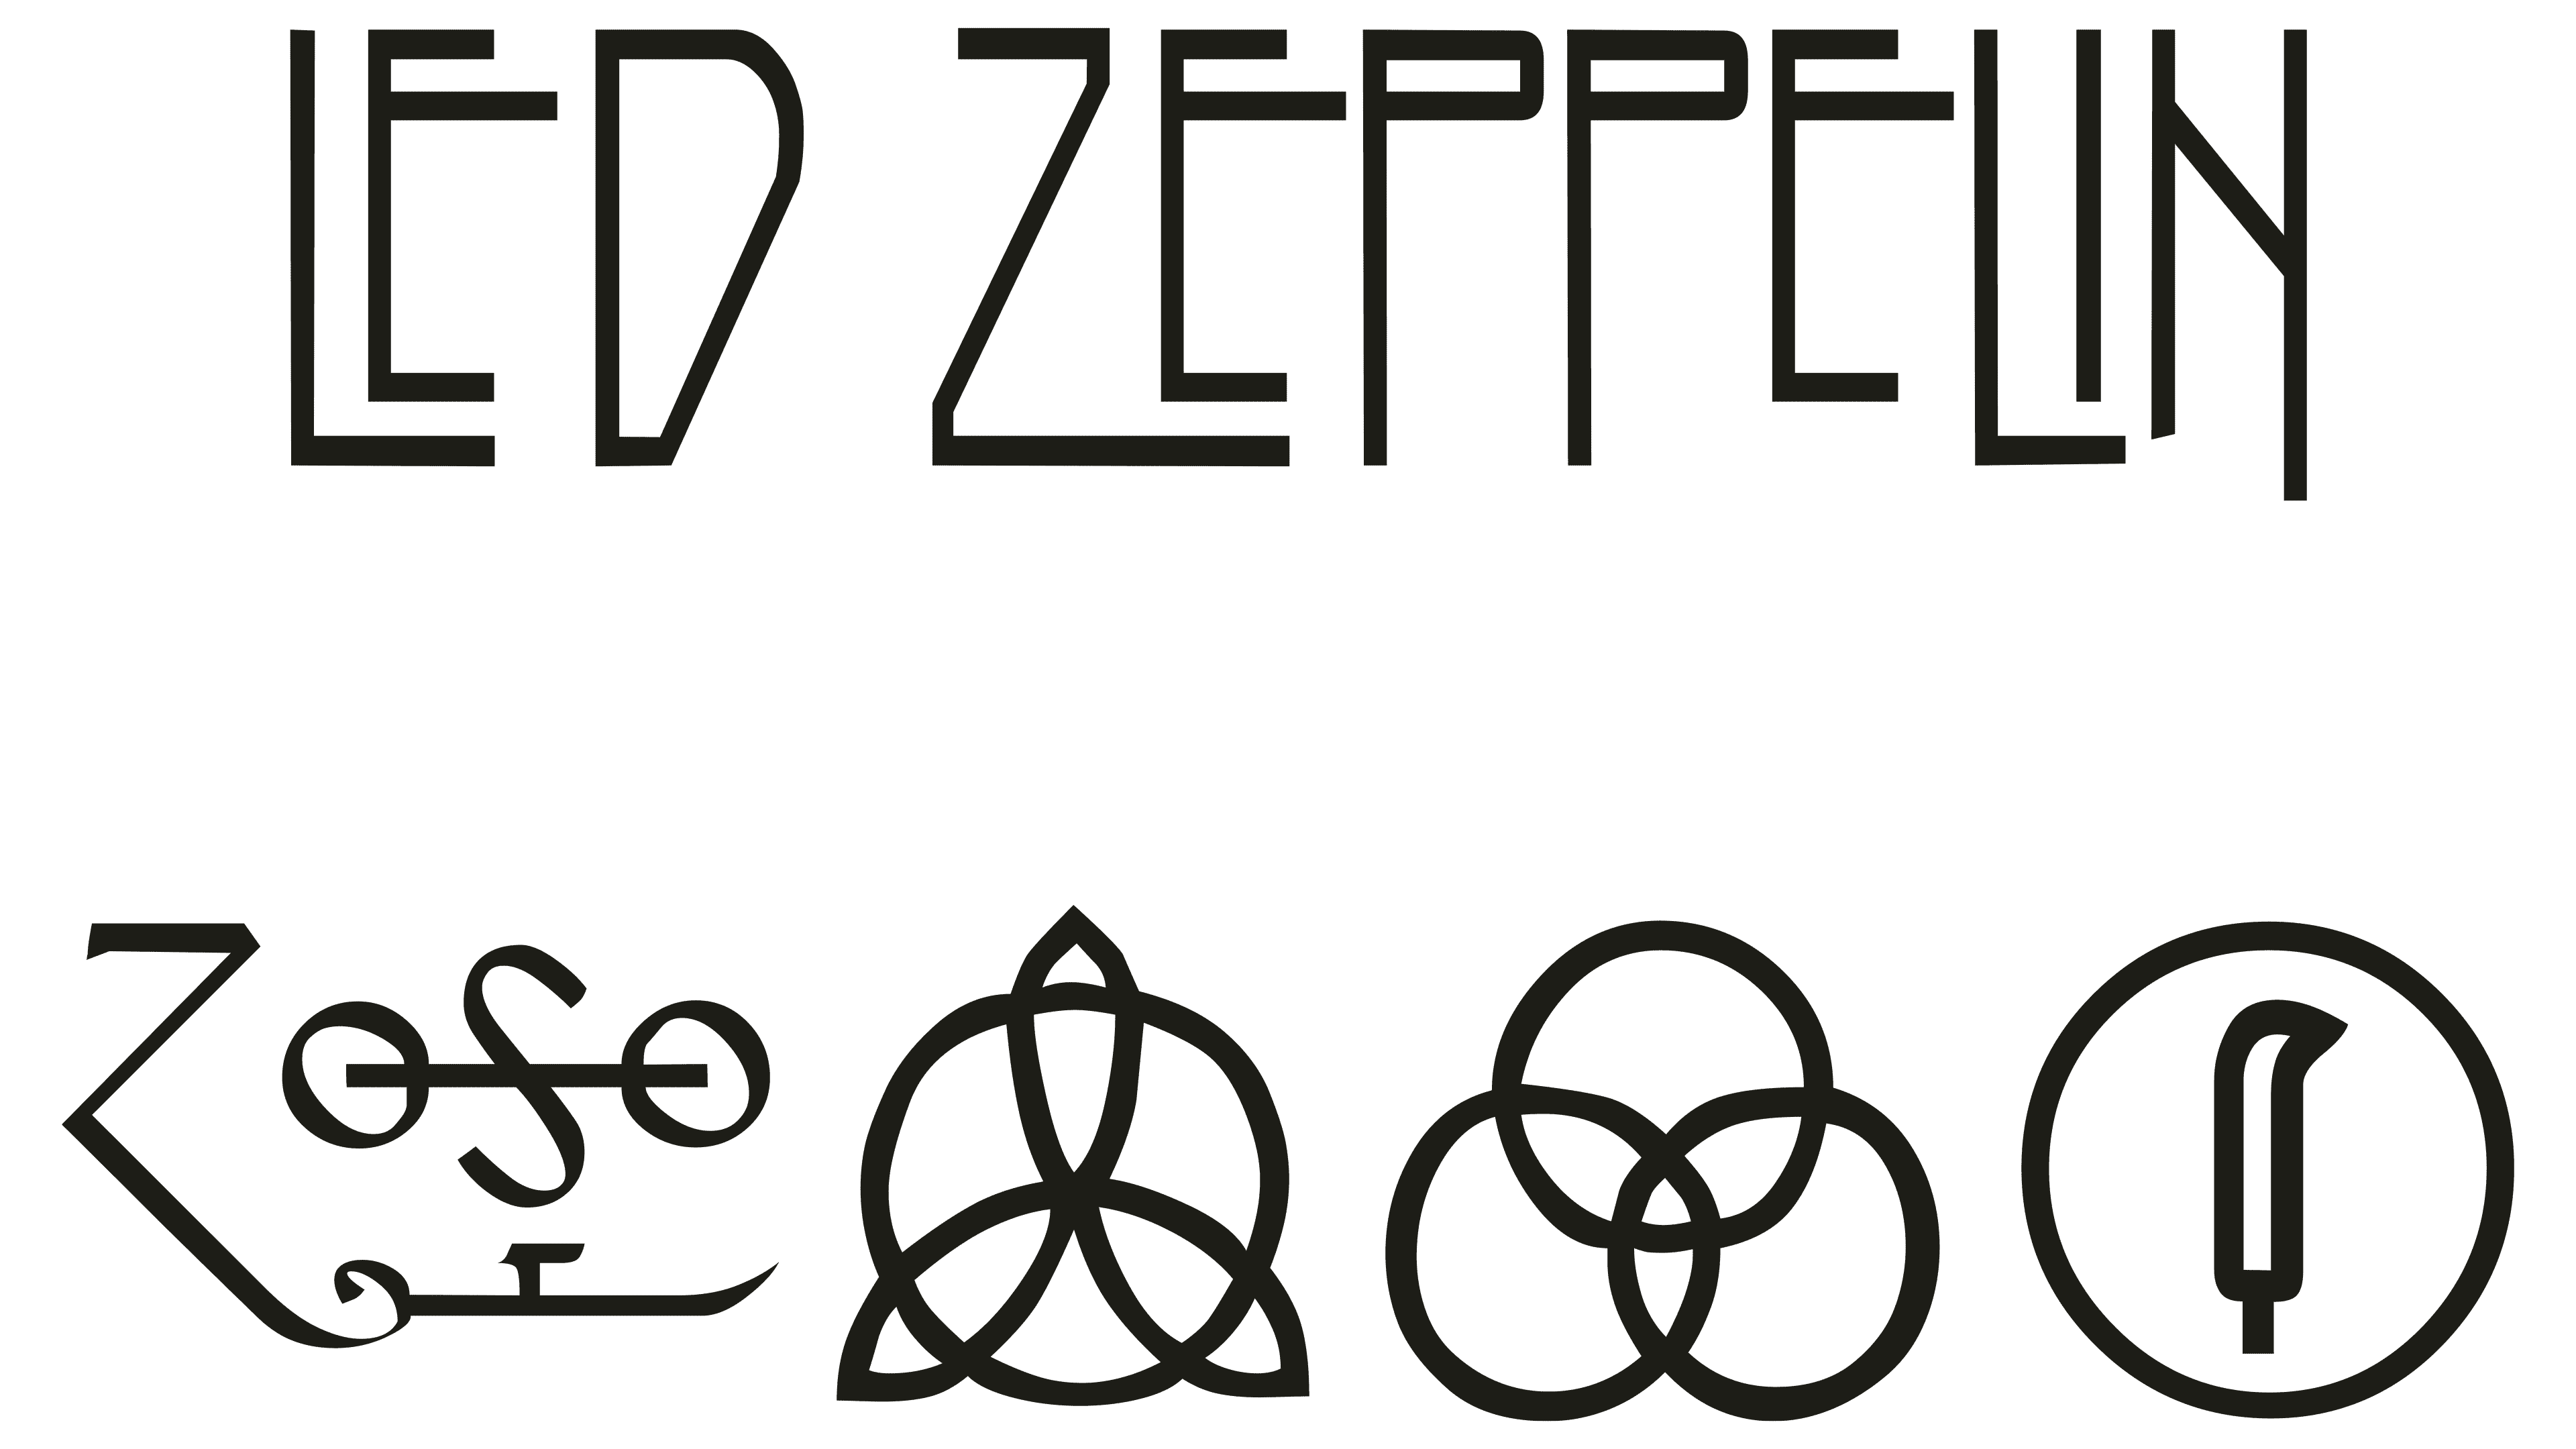 led zeppelin swan song logo meaning